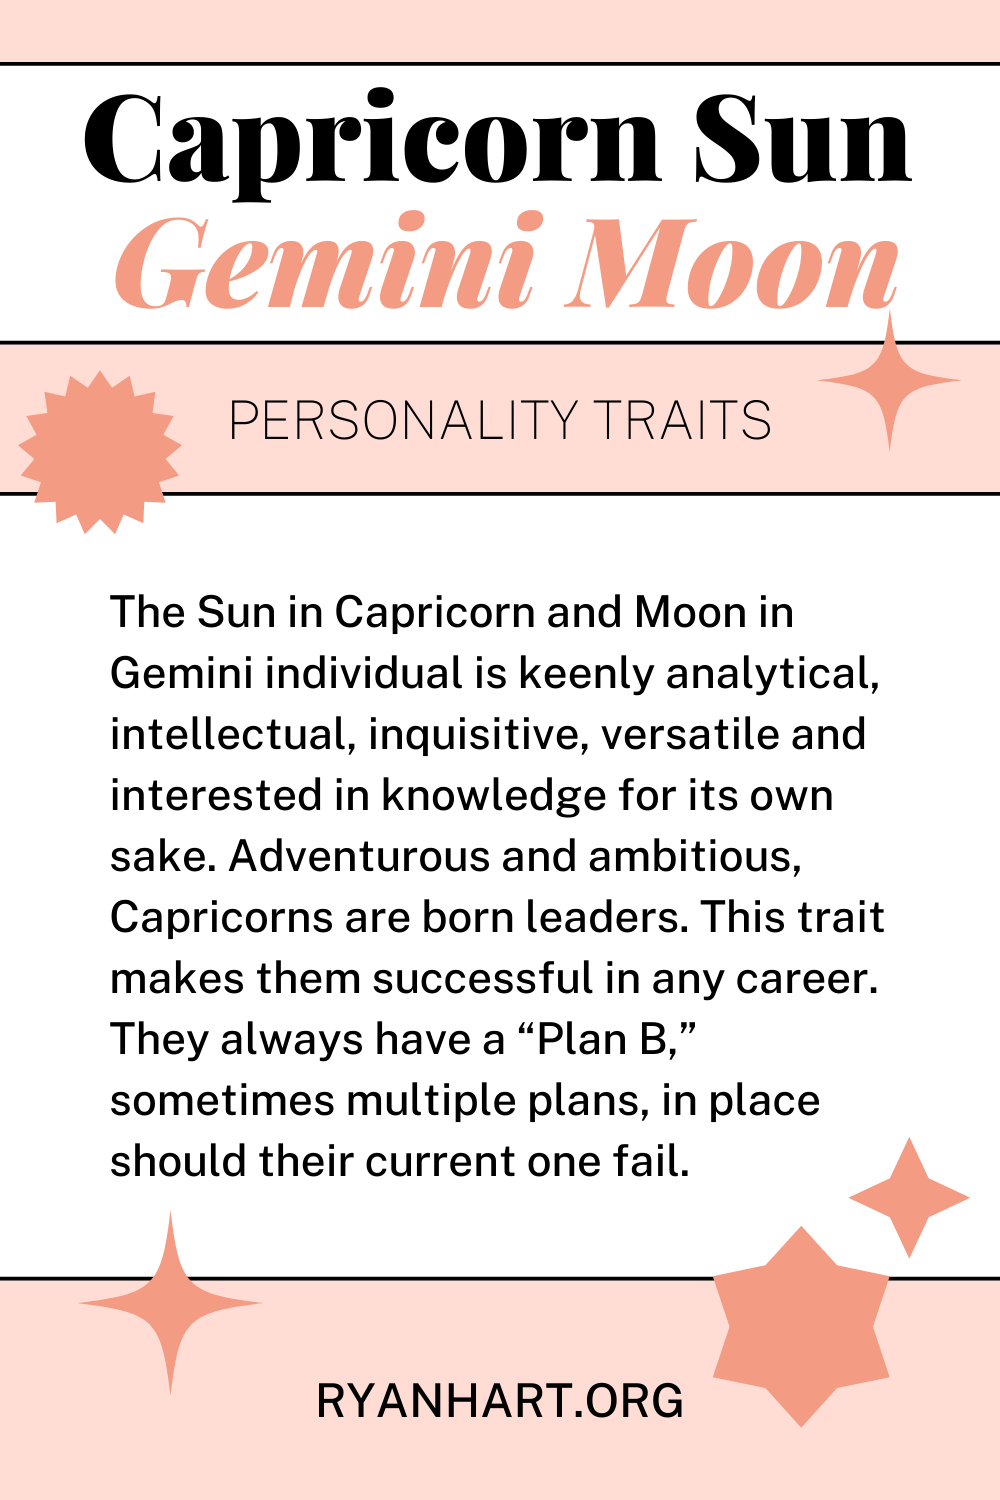 Capricorn Sun Gemini Moon Description